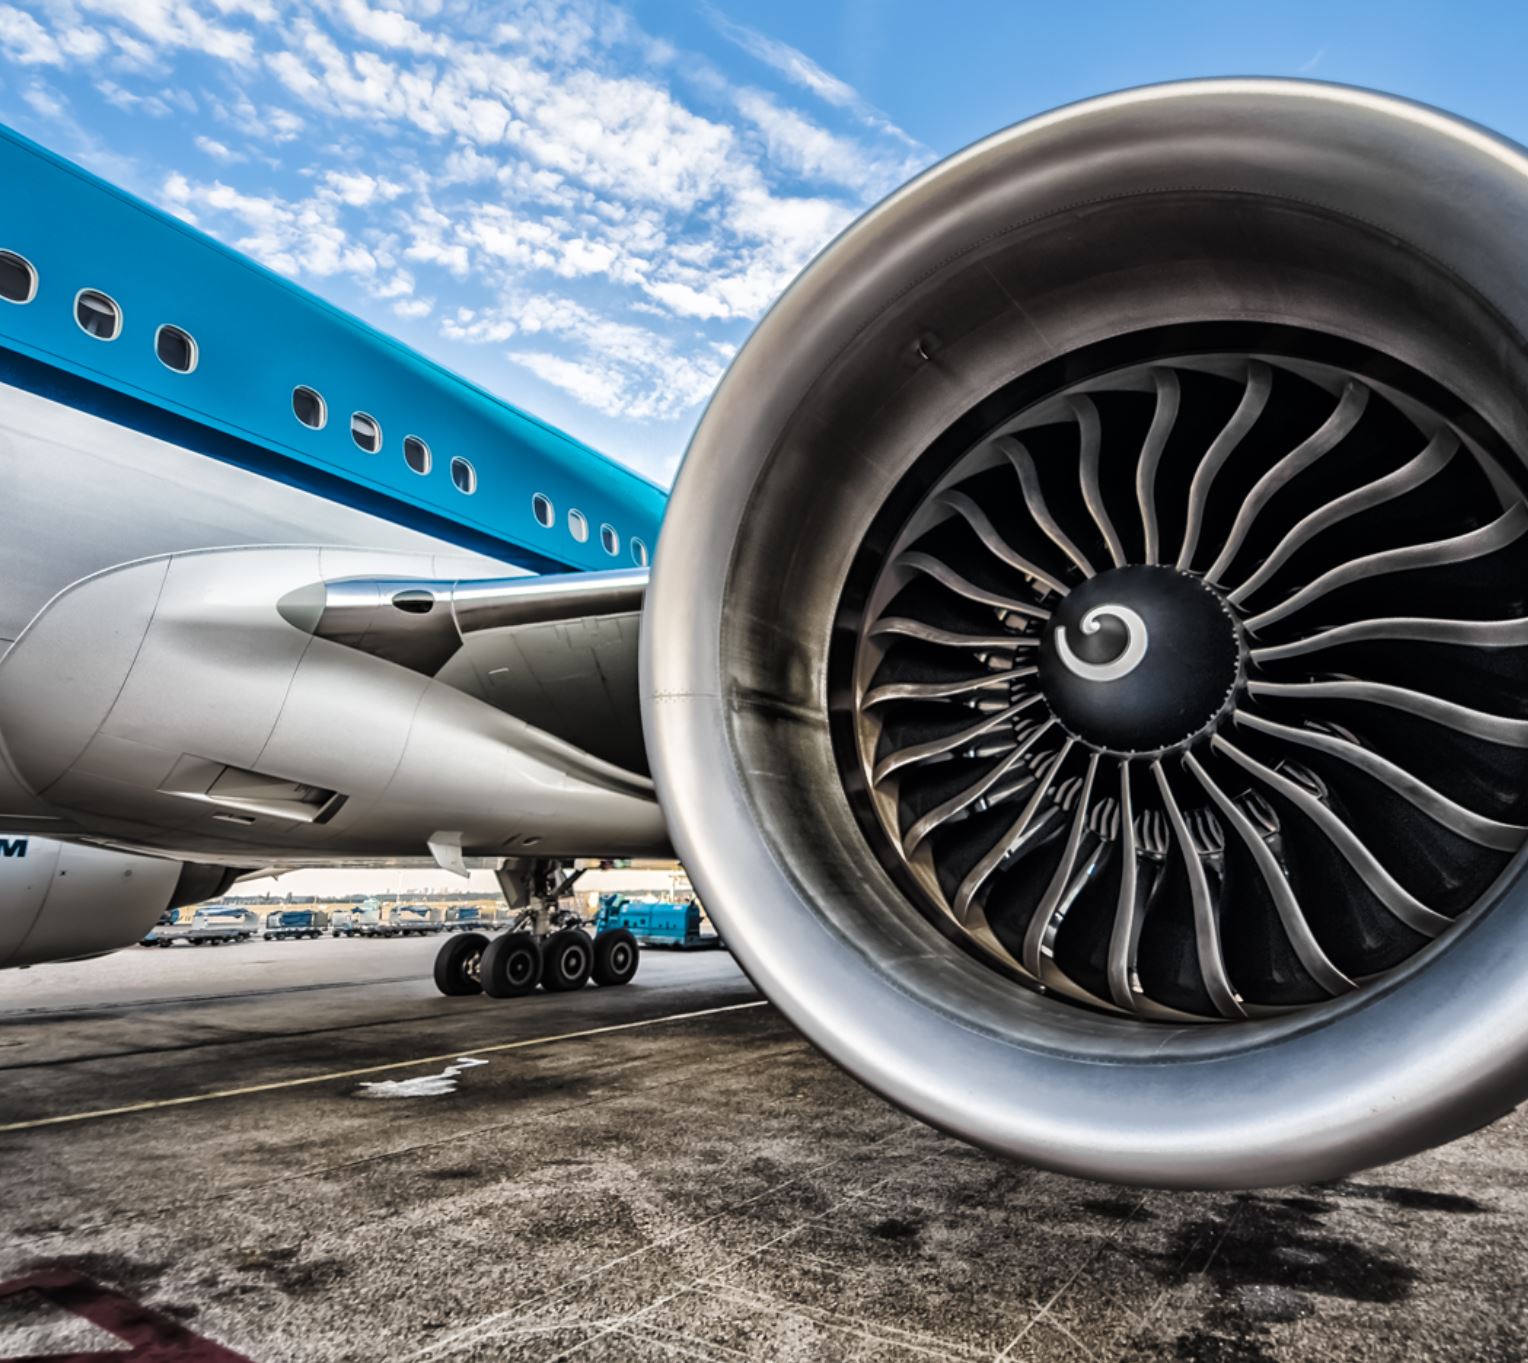 Engine failure… Can an airplane still fly?